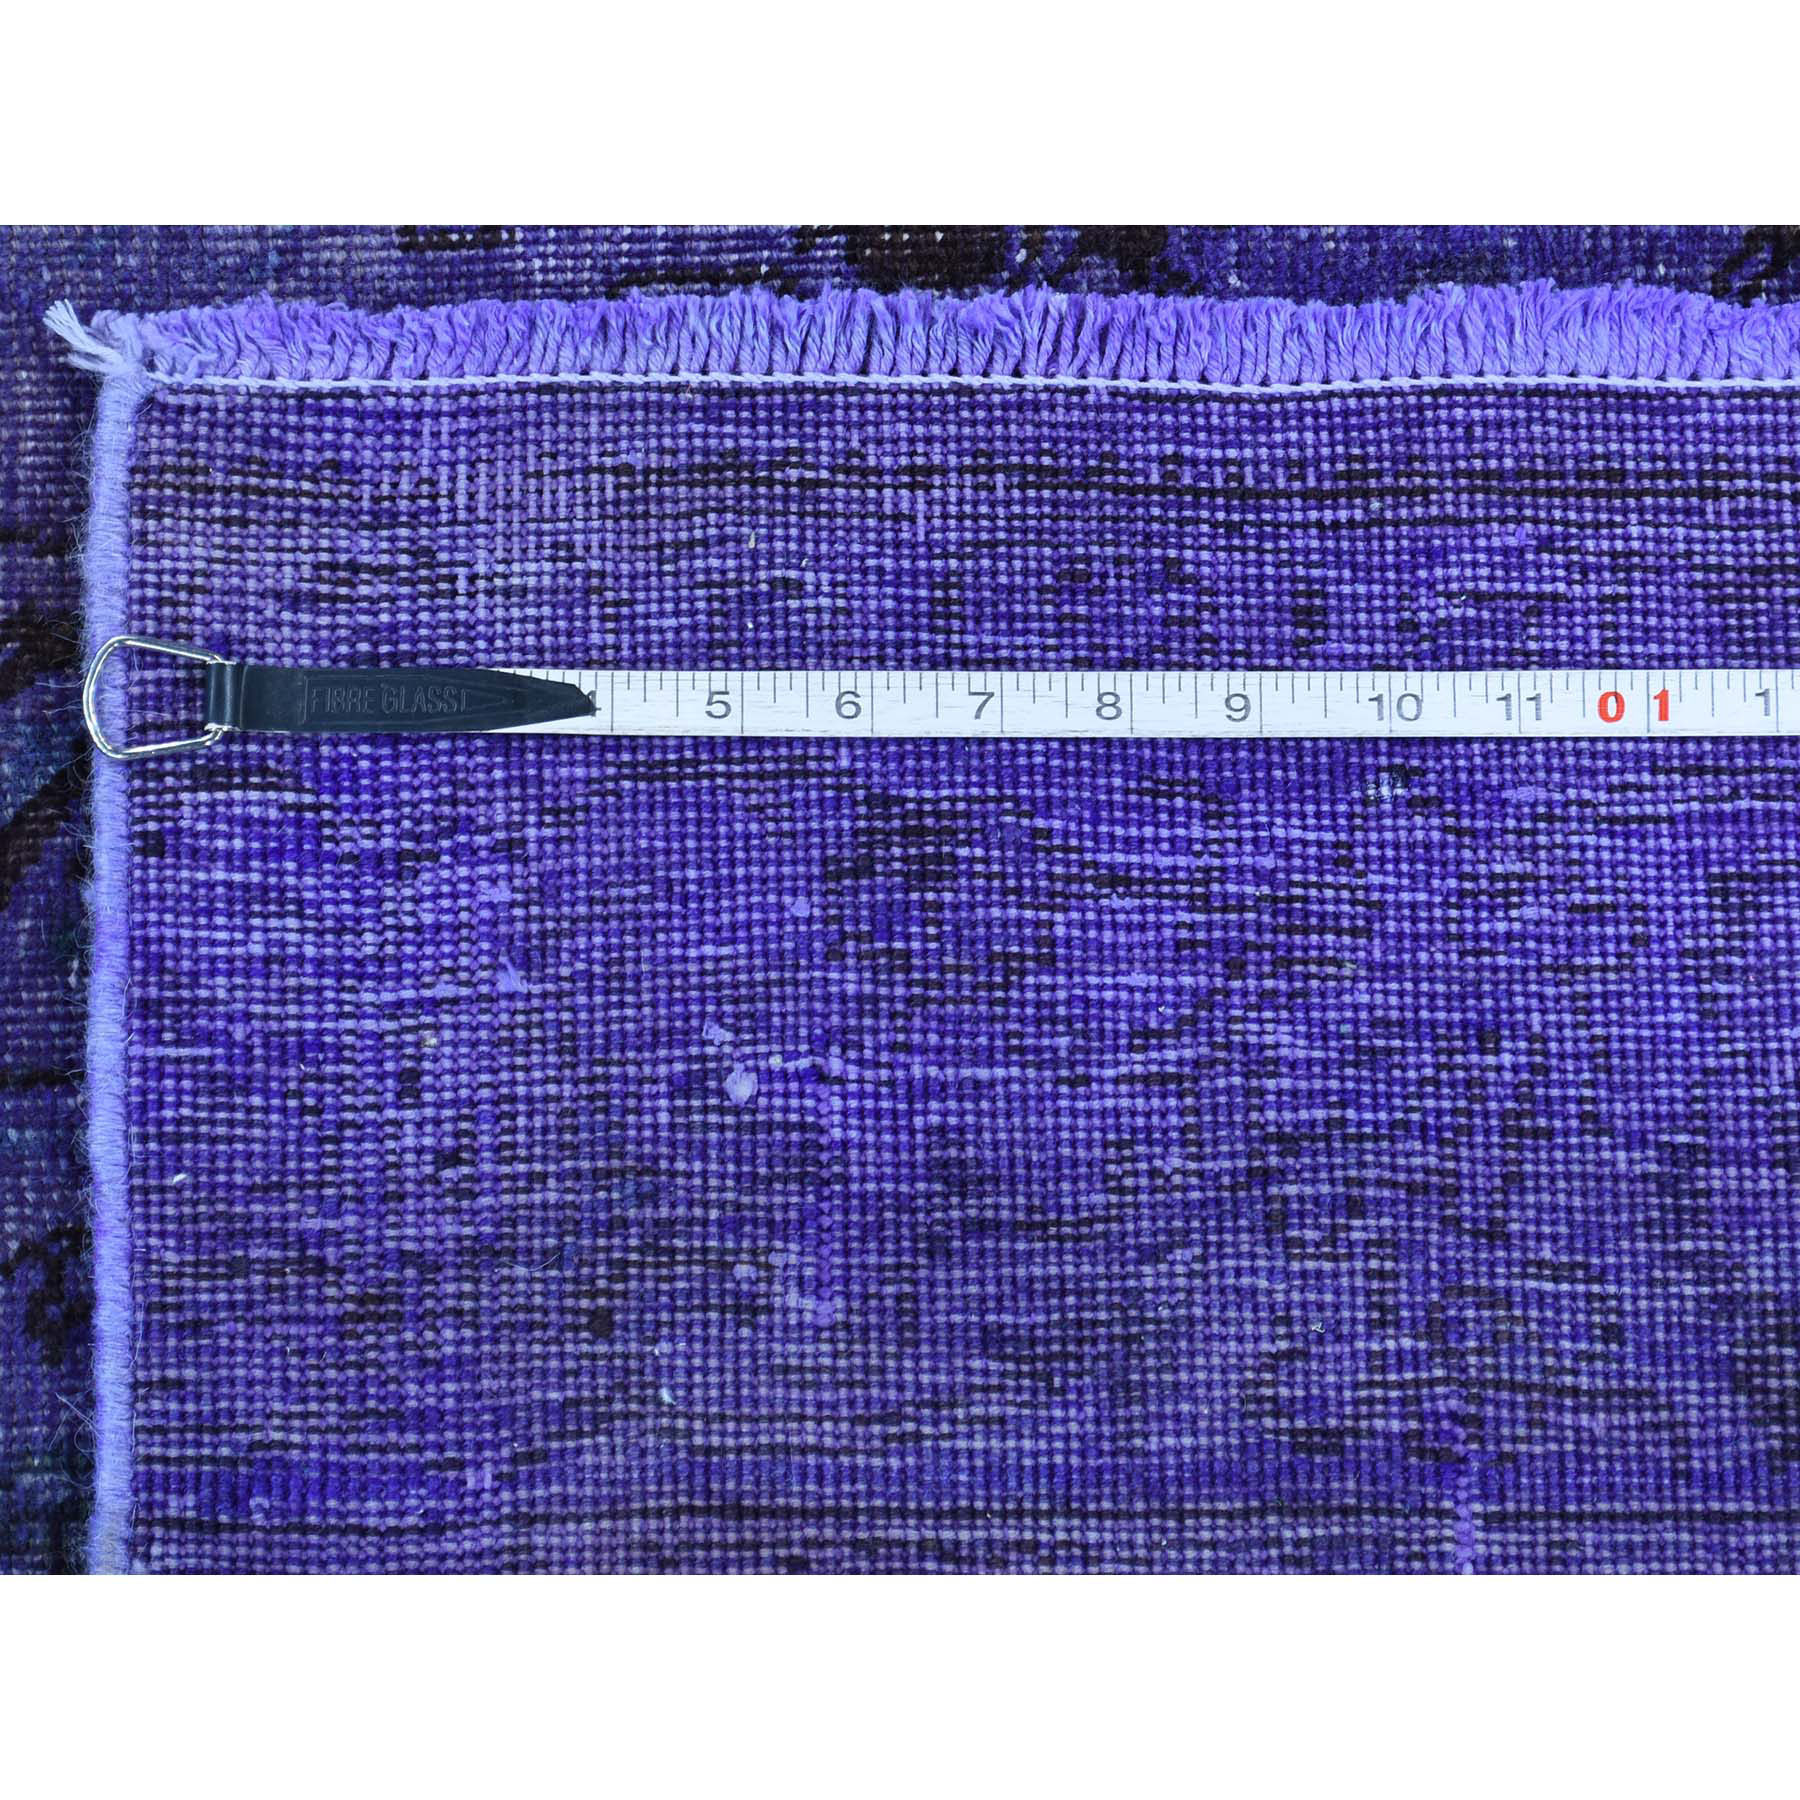 4-10 x9-2  Handmade Wide Runner Overdyed Persian Tabriz Vintage Rug 